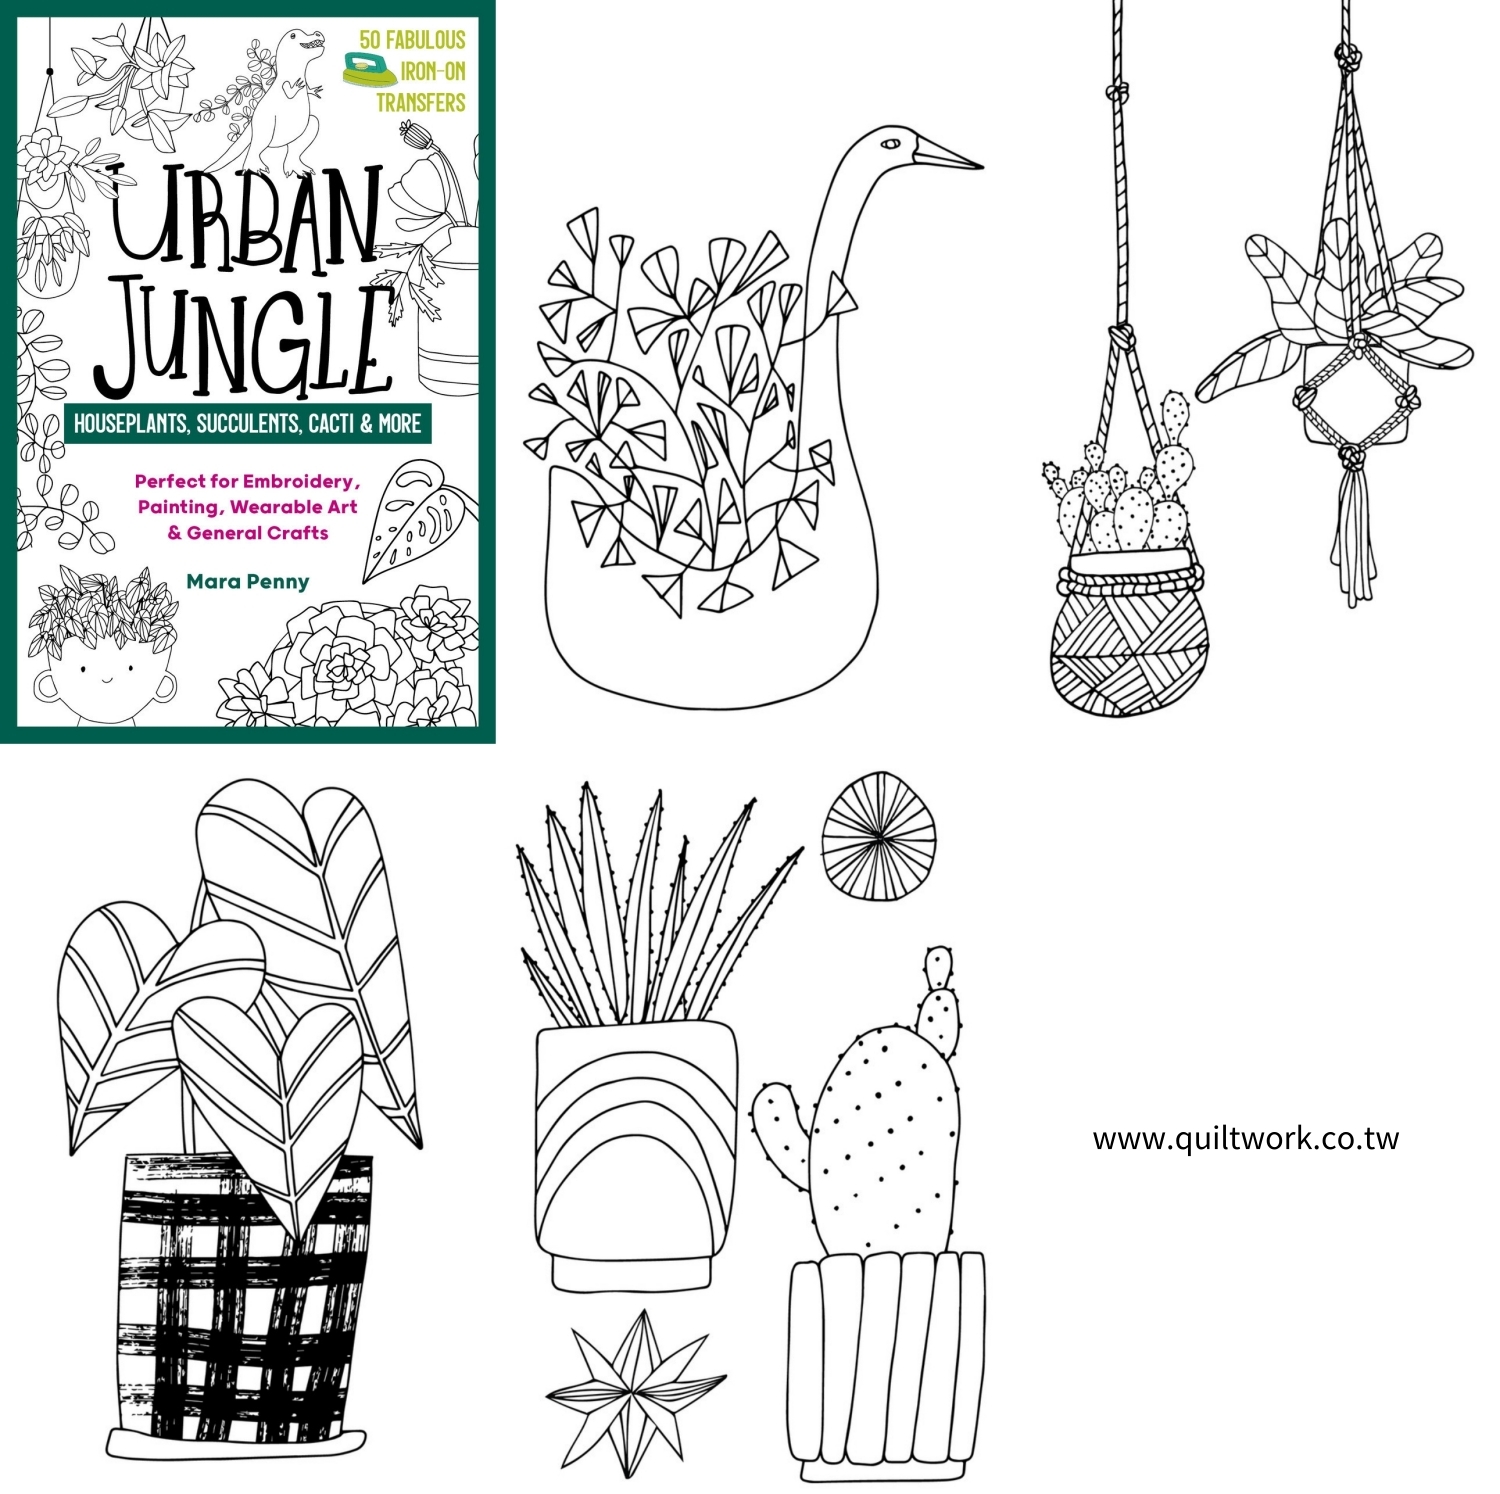 stash-books-urban-jungle-houseplants-succulents-cacti-and-more__36723-tile